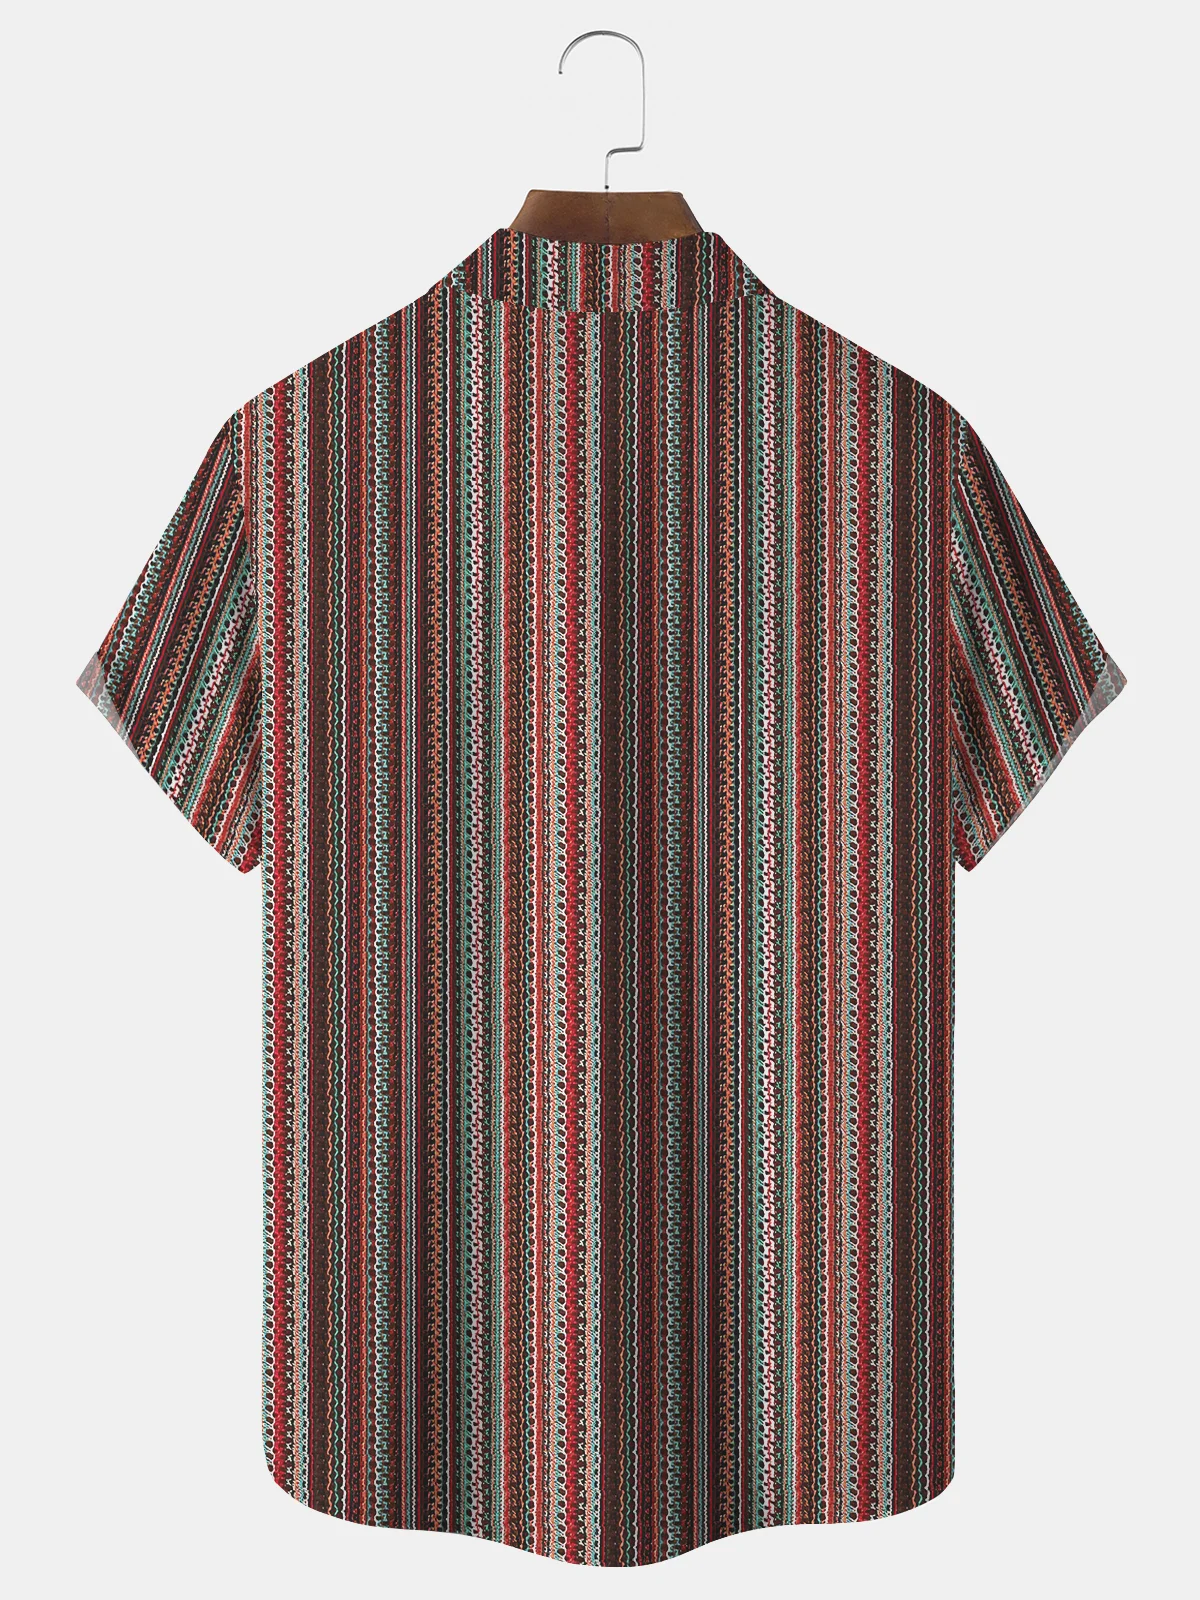 Royaura Vintage Ethnic Print Beach Men's Hawaiian Oversized Shirt With Pocket